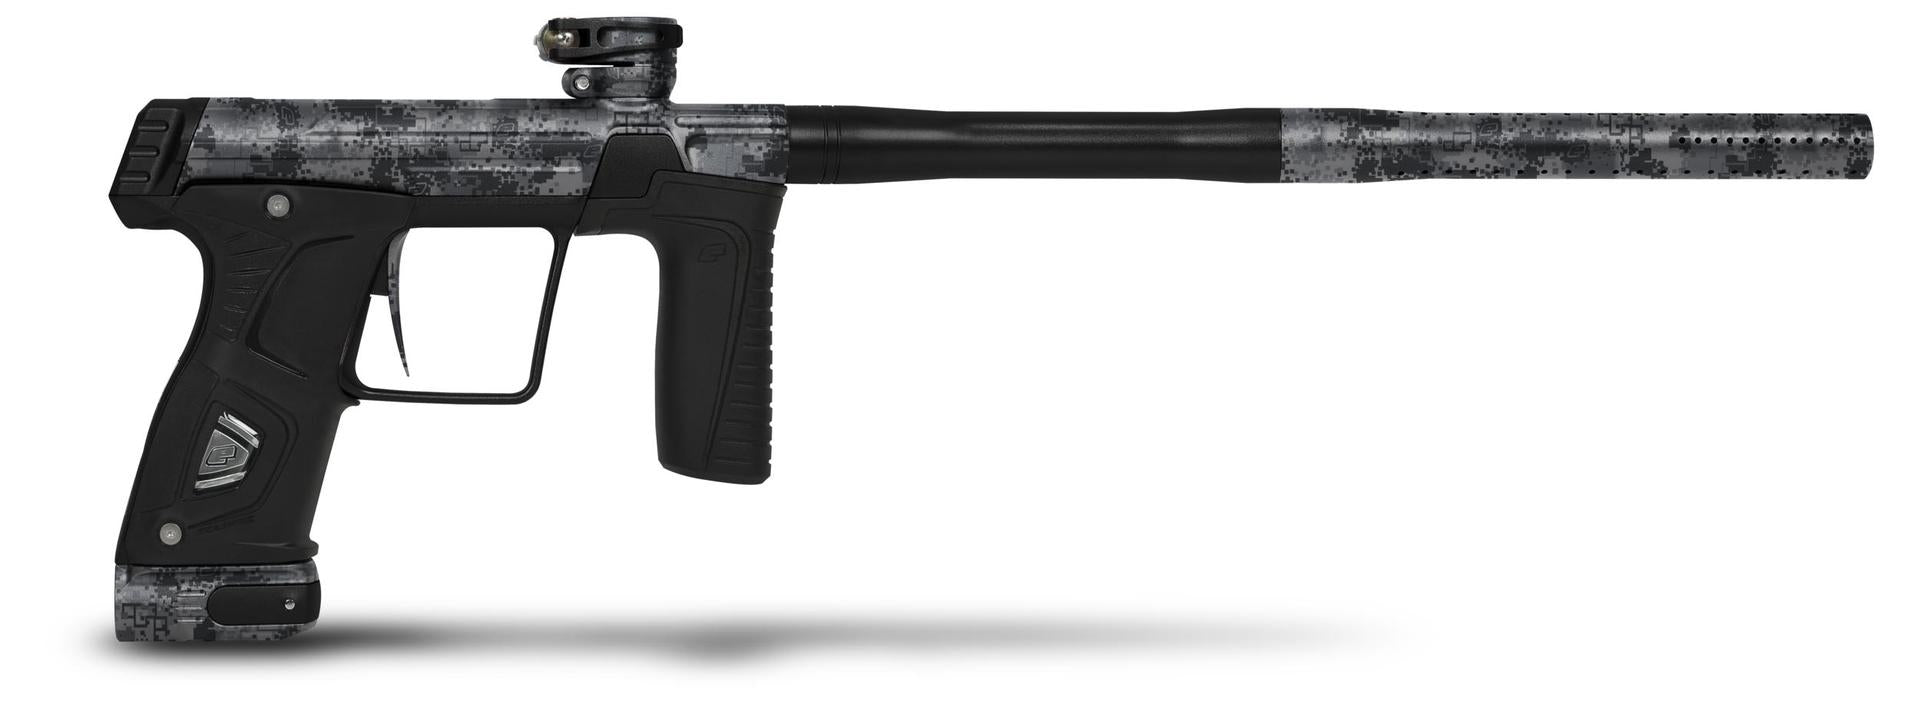 PLANET ECLIPSE GTEK 170R PAINTBALL GUN - HDE URBAN - Eminent Paintball And Airsoft